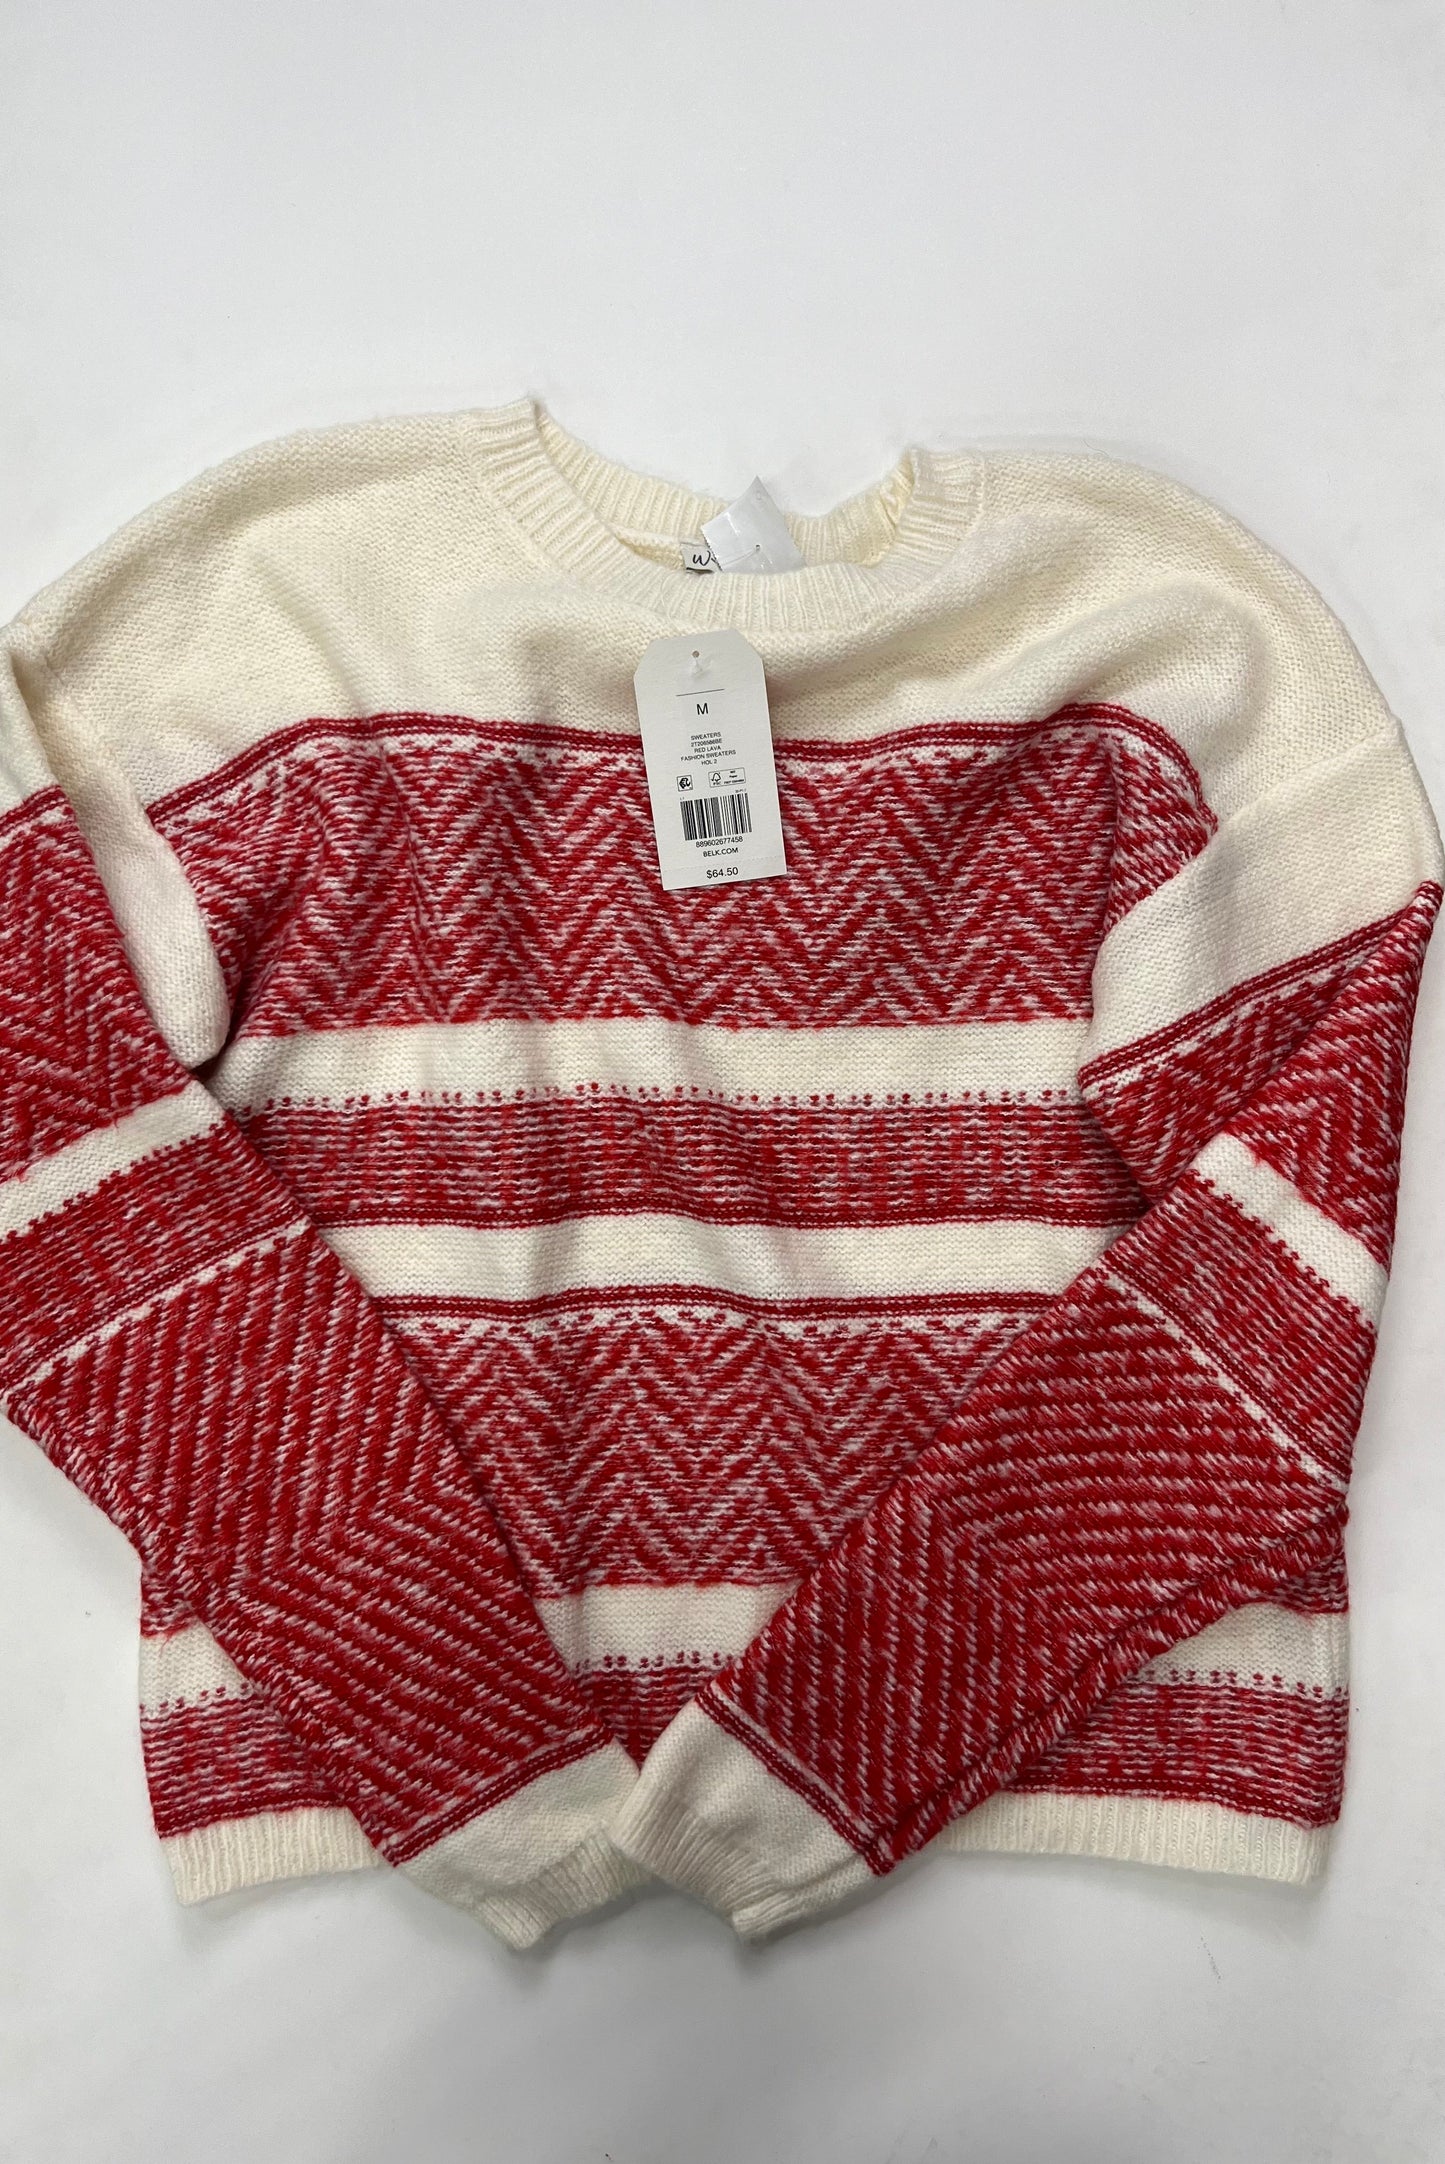 Sweater By Wondery NWT Size: M